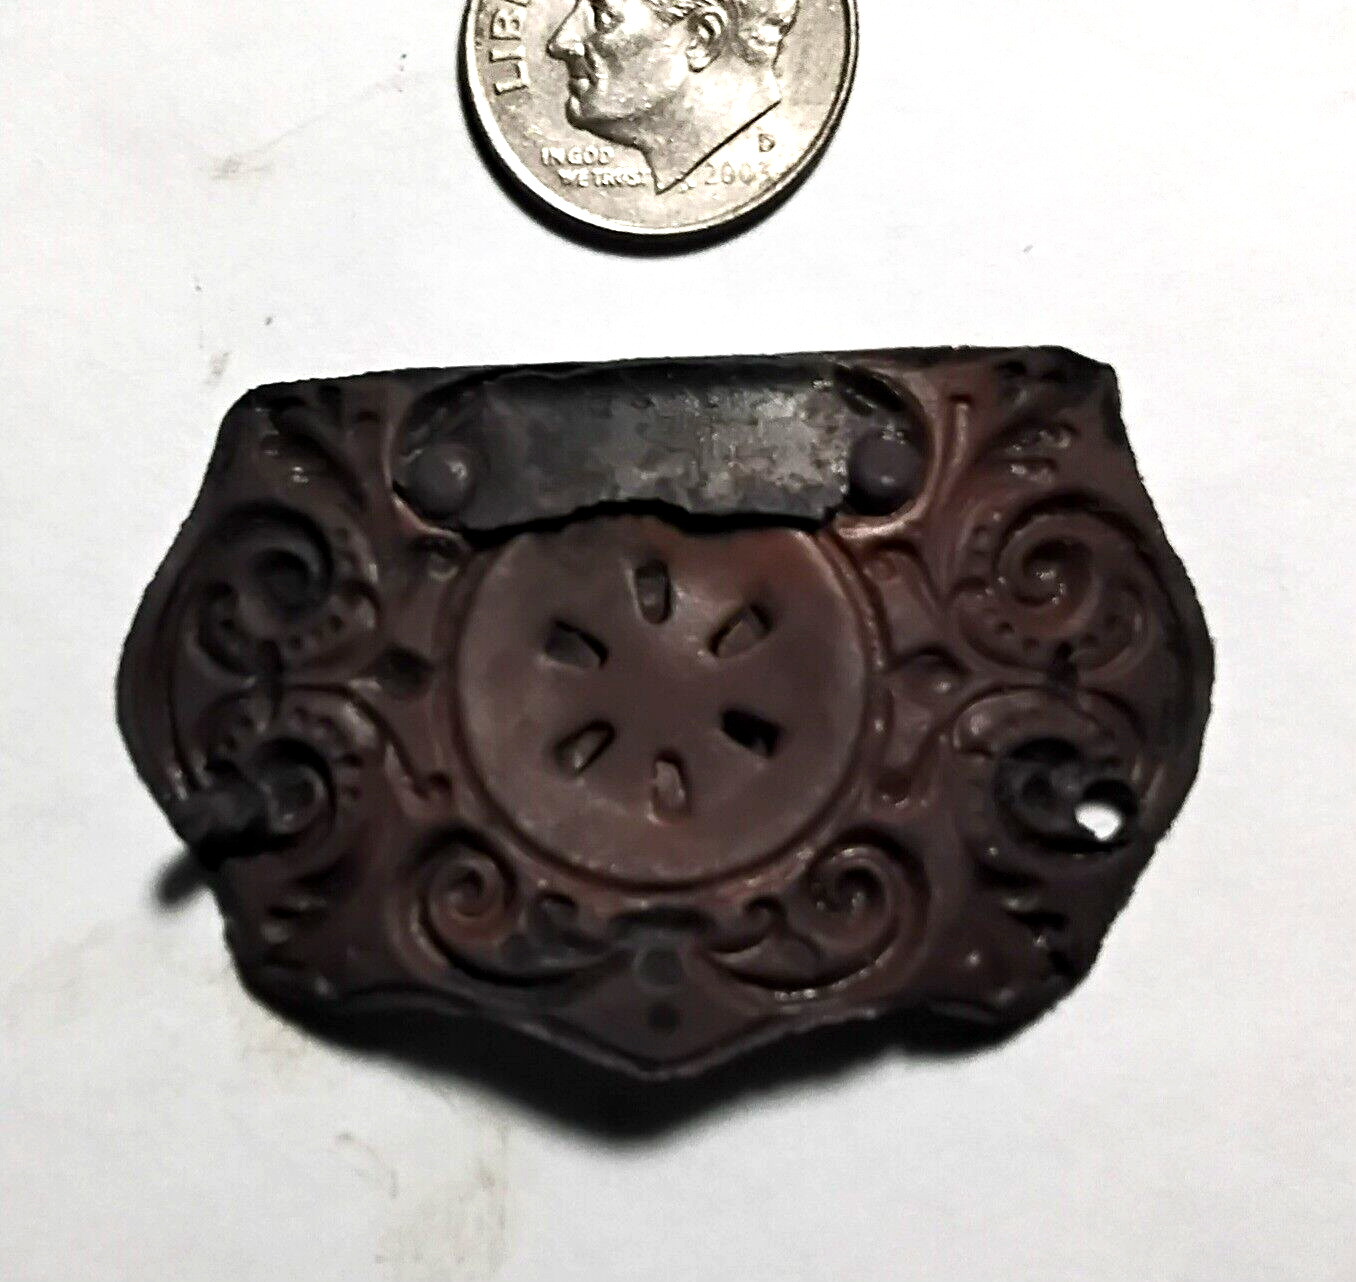 Very rare hat vent inside an ornate copper plate, a dug artifact dug Central VA.